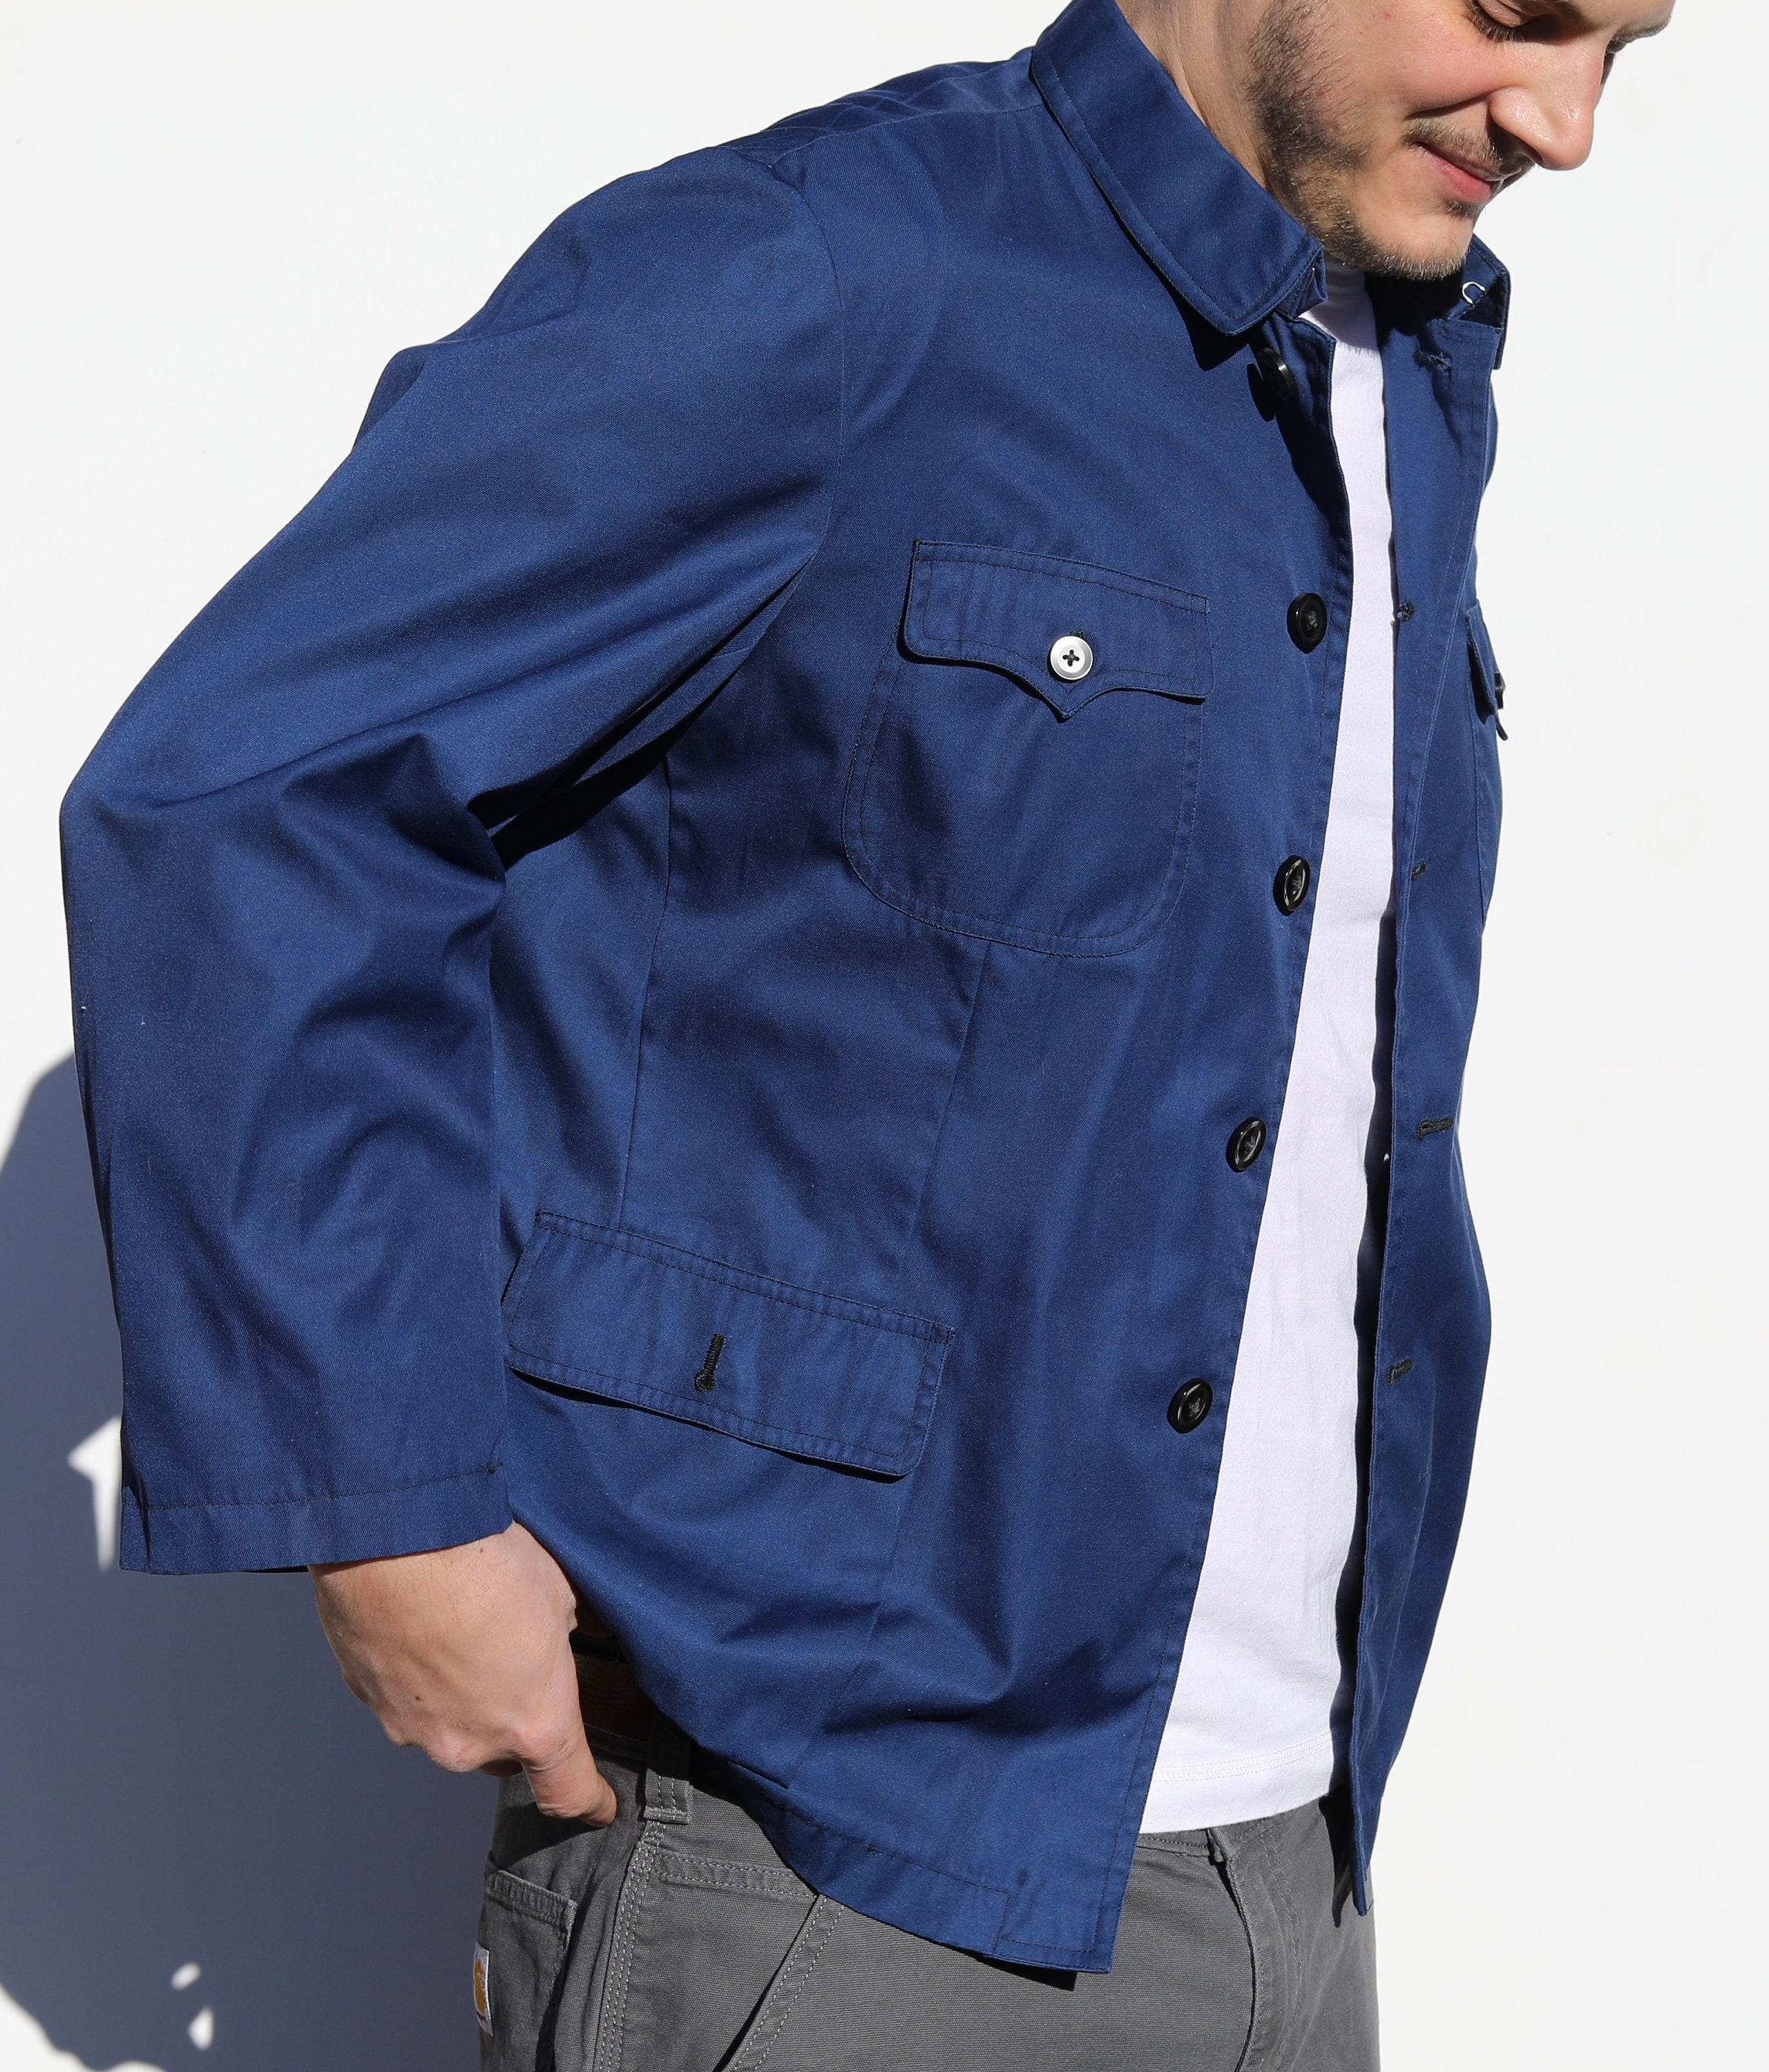 VTG Deadstock Royal Blue Chore Jacket, Workwear Coat, 90s Casual Blue Jacket,  Euc Aprox Size M, Workwear Chefs Jacket With Pockets -  Canada